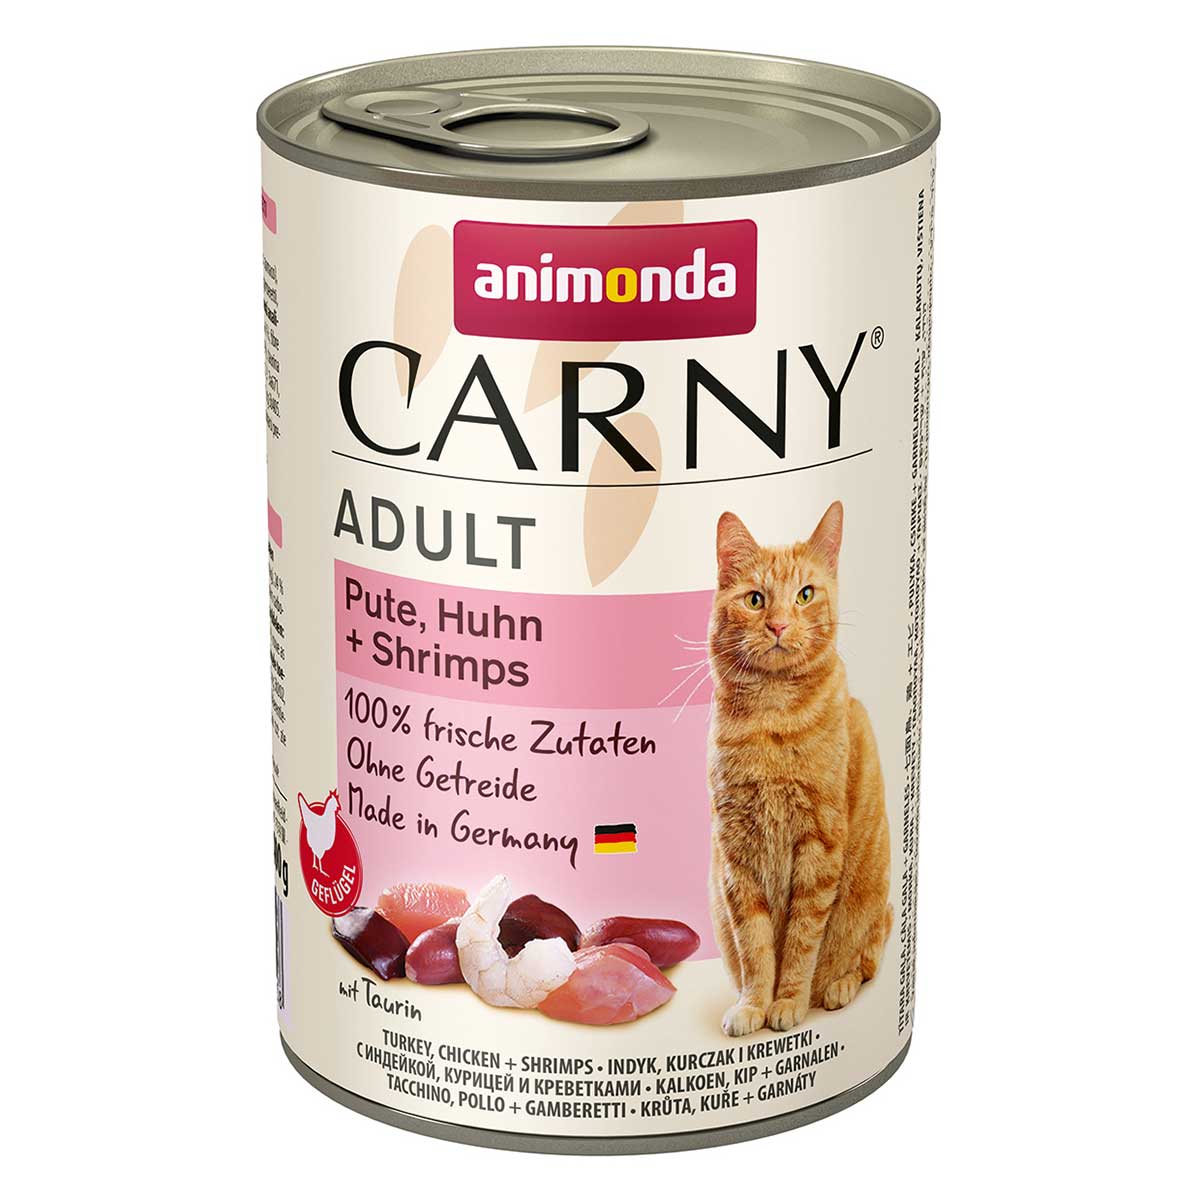 animonda Carny Adt Pute, Huhn und Shrimps 24x400g